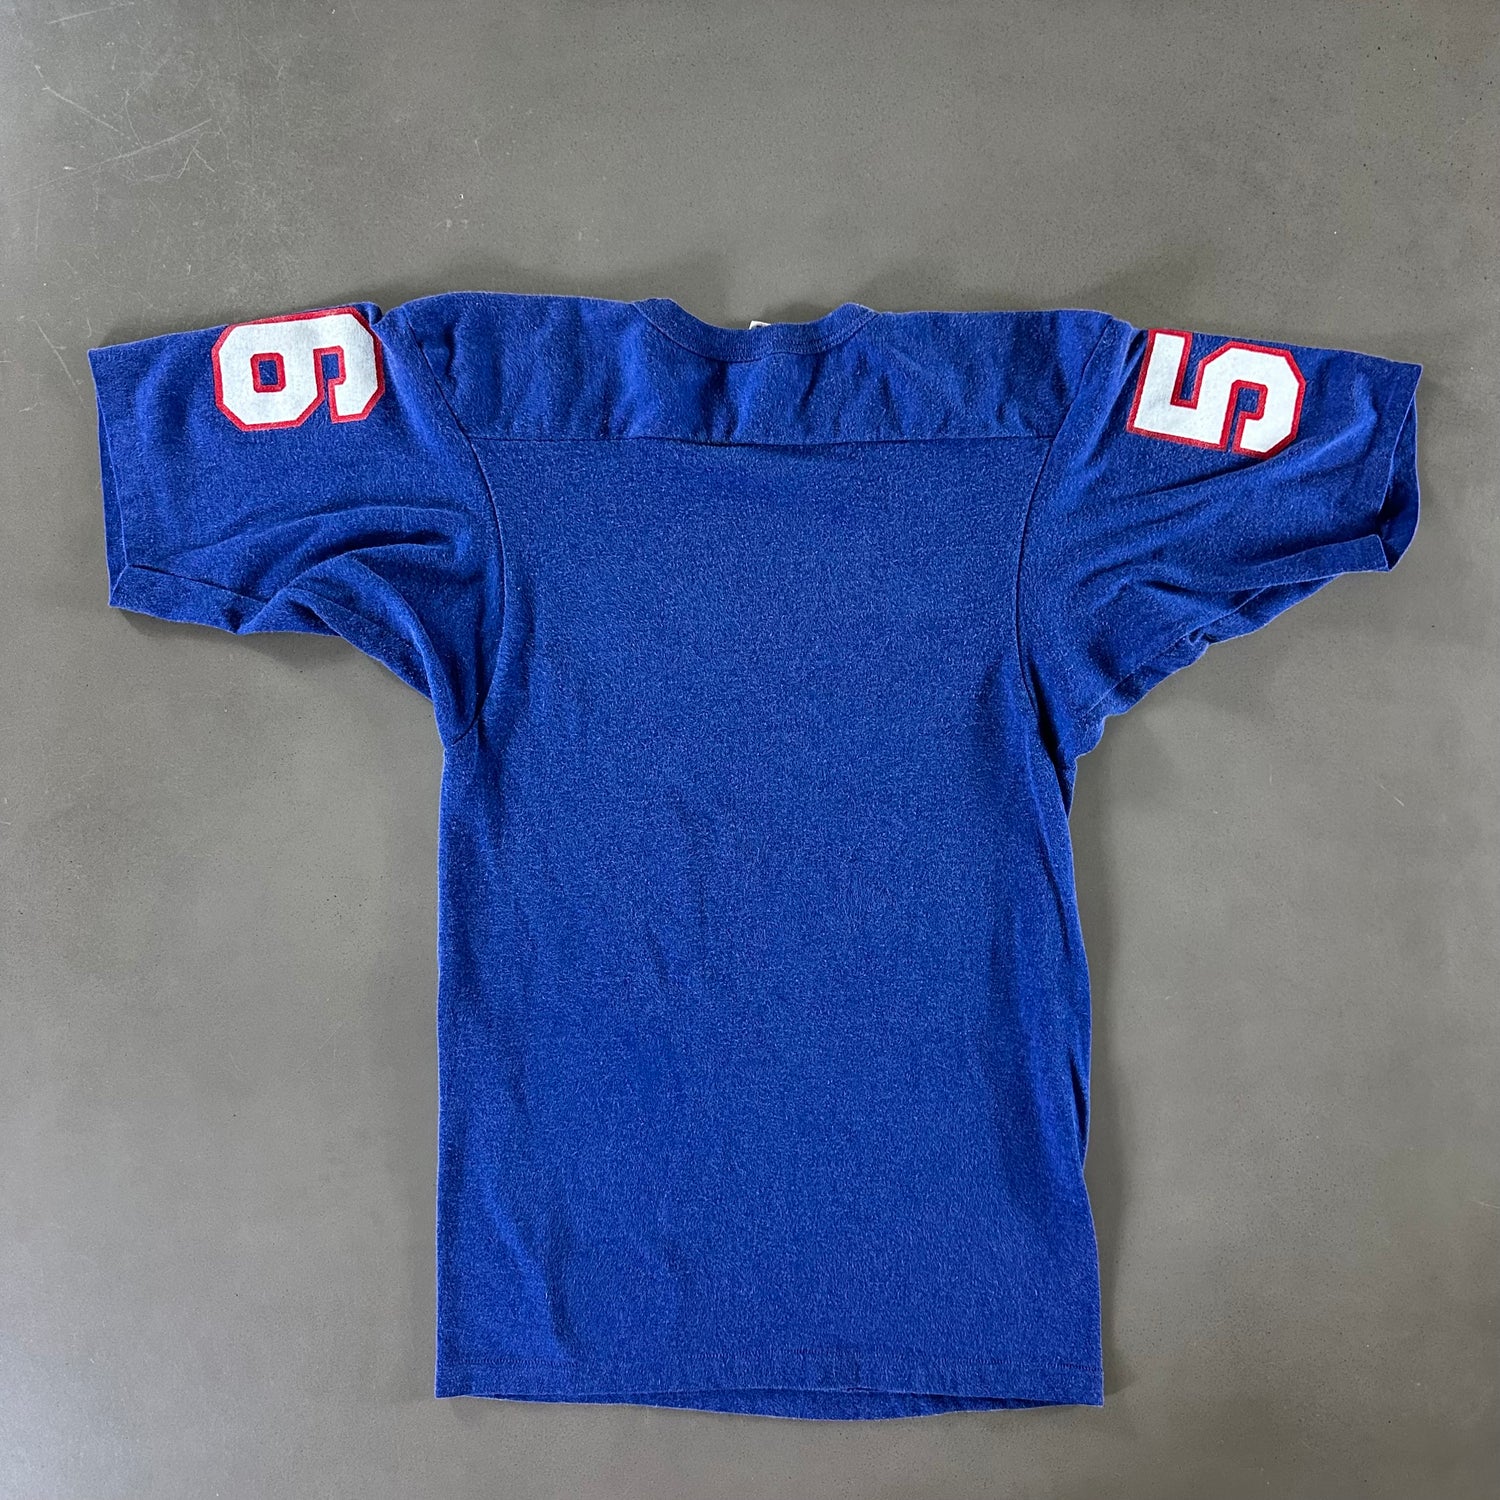 Vintage 1980s New York Giants T-shirt size Medium